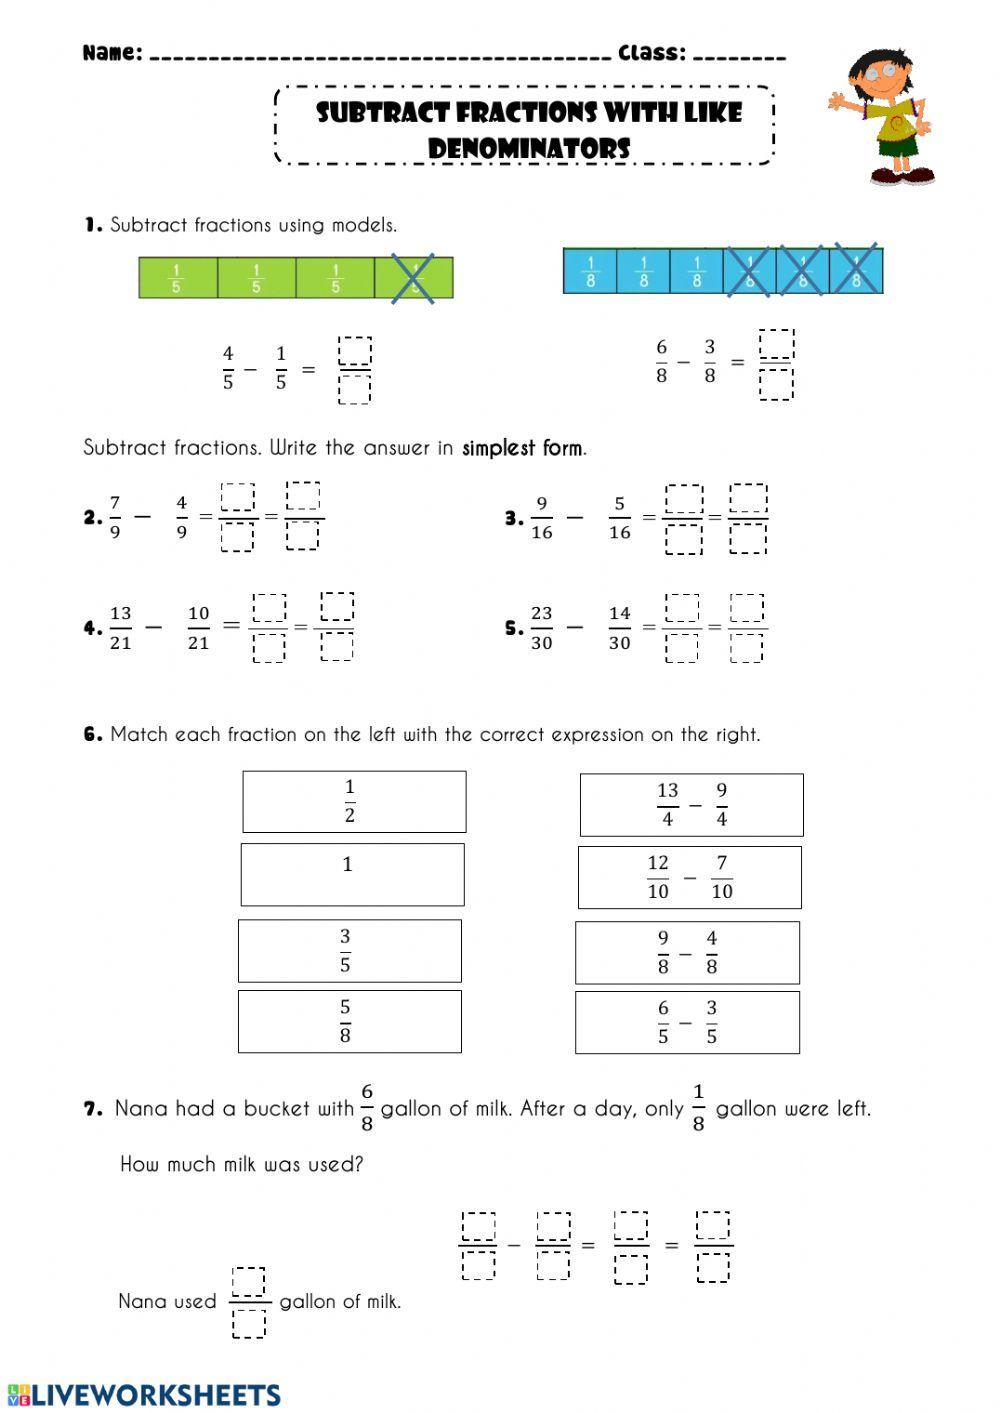 Subtract fractions with like denominators (Practice)